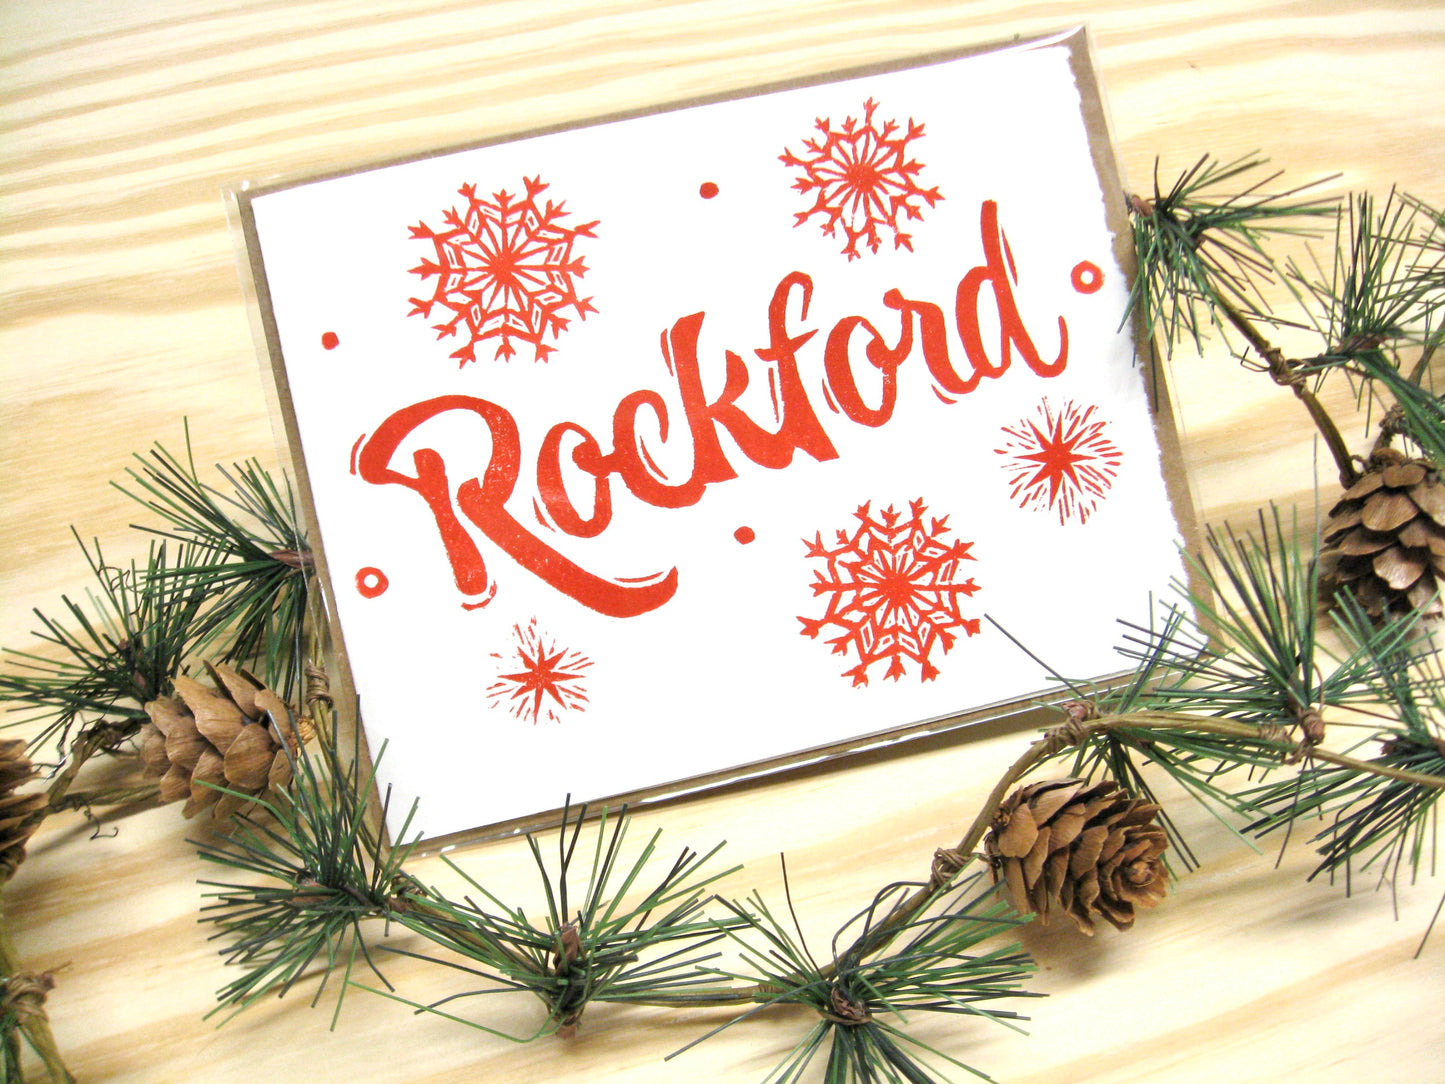 Starburst Red Rockford single card - woodblock printed